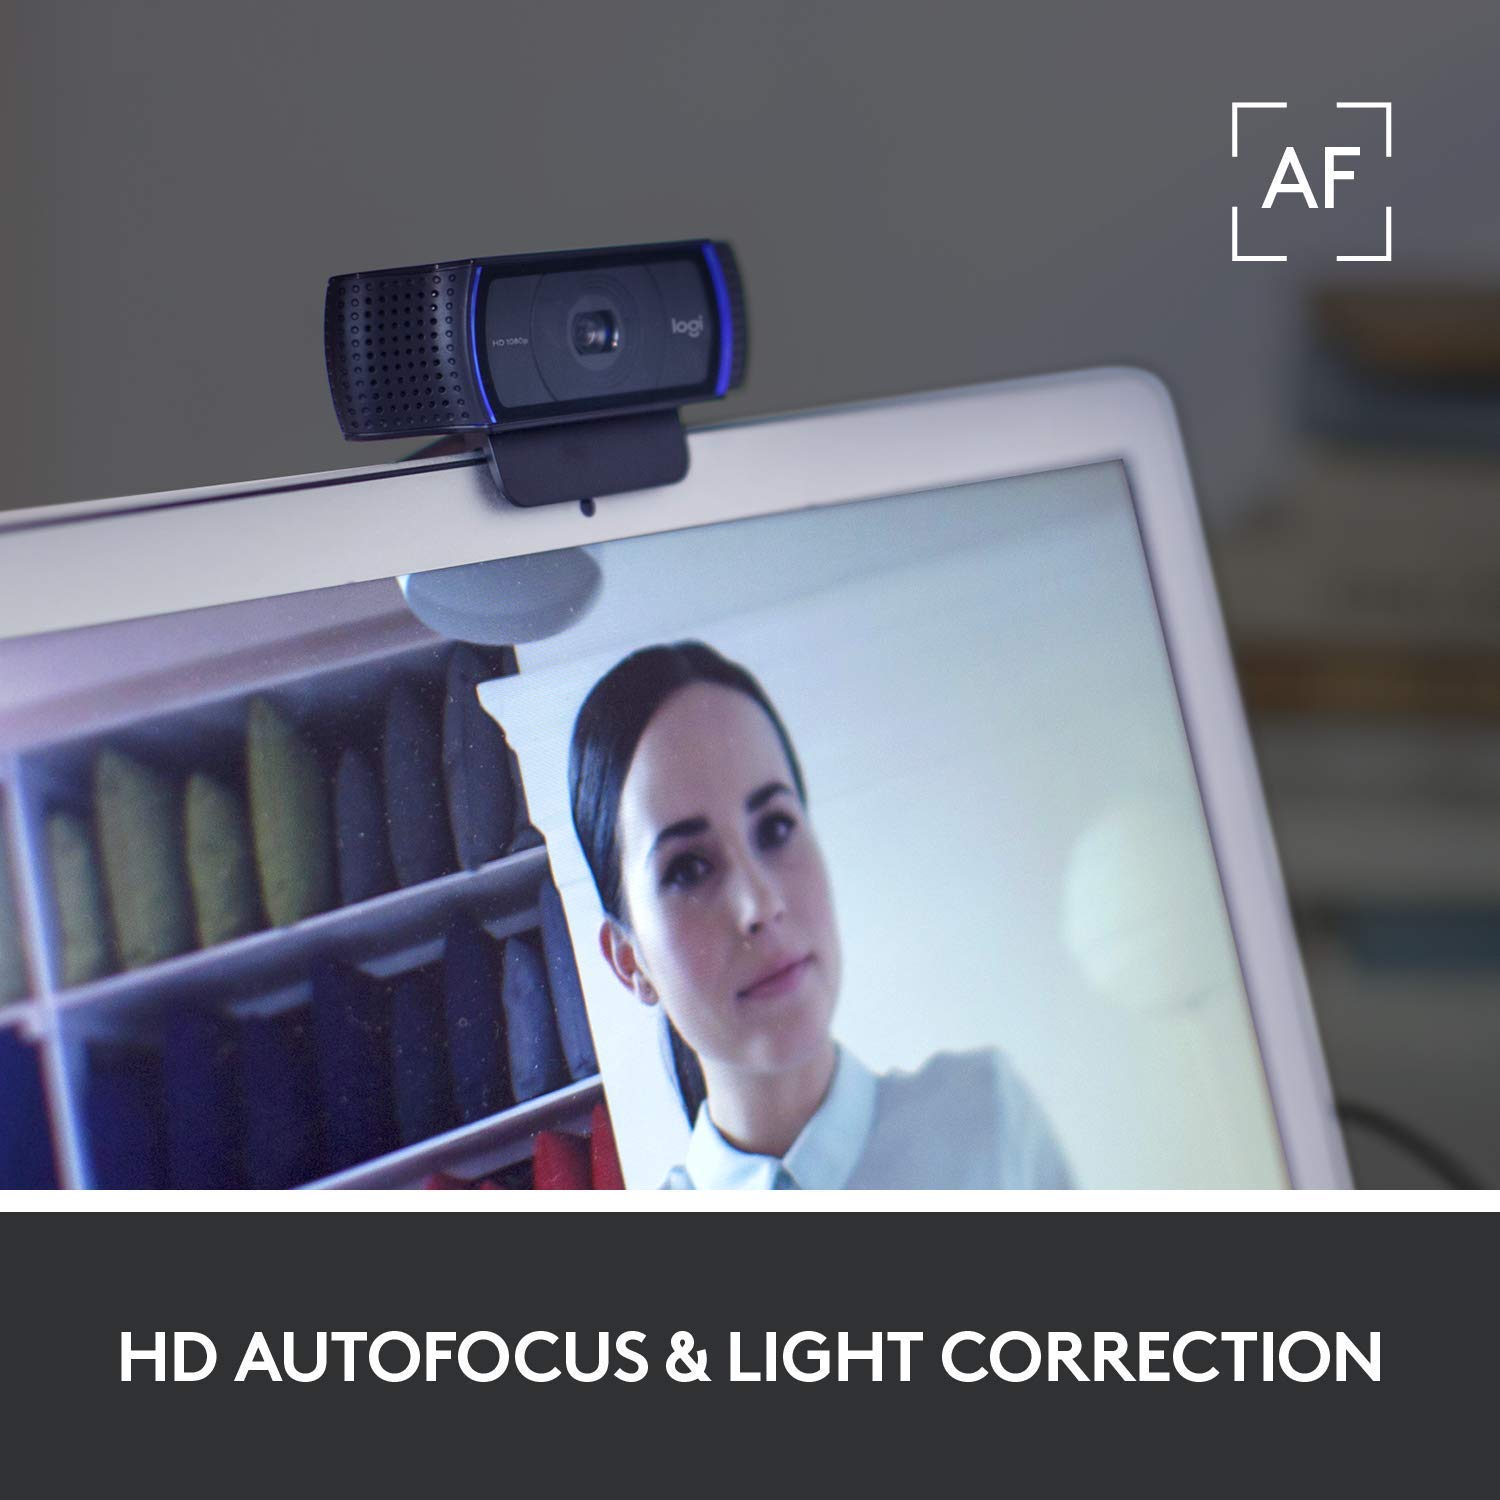 Logitech HD Pro Webcam C920, 1080p Widescreen Video Calling and Recording-(Renewed)